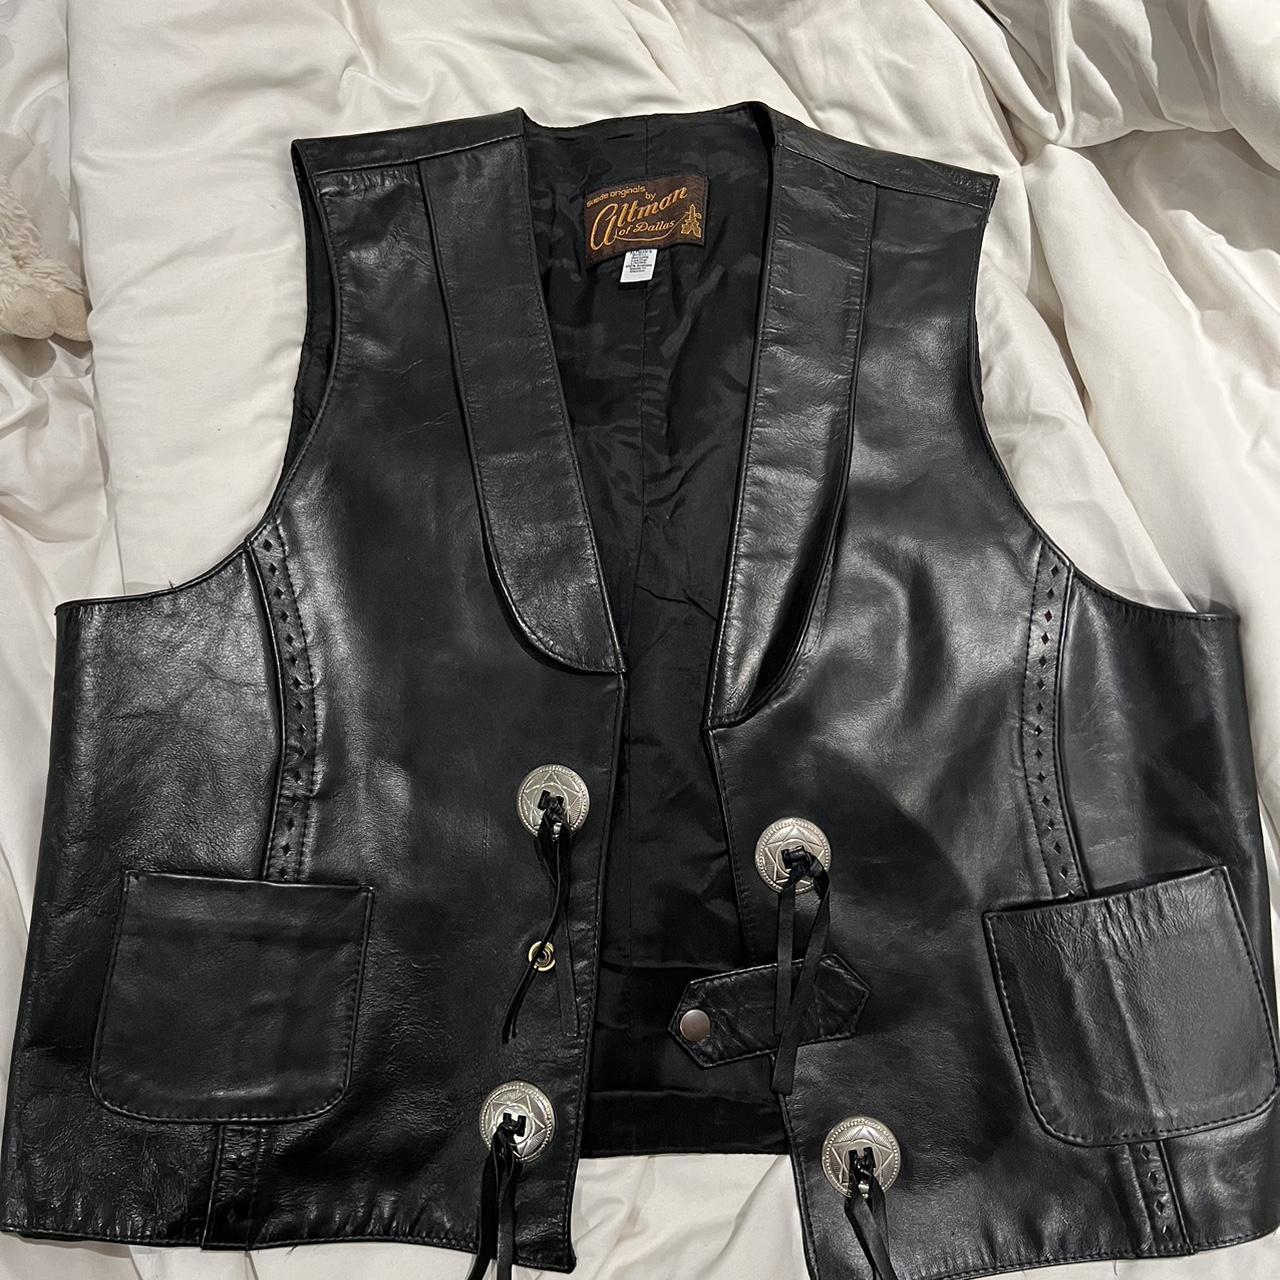 Vintage Western Leather Vest! Worn once, in perfect... - Depop